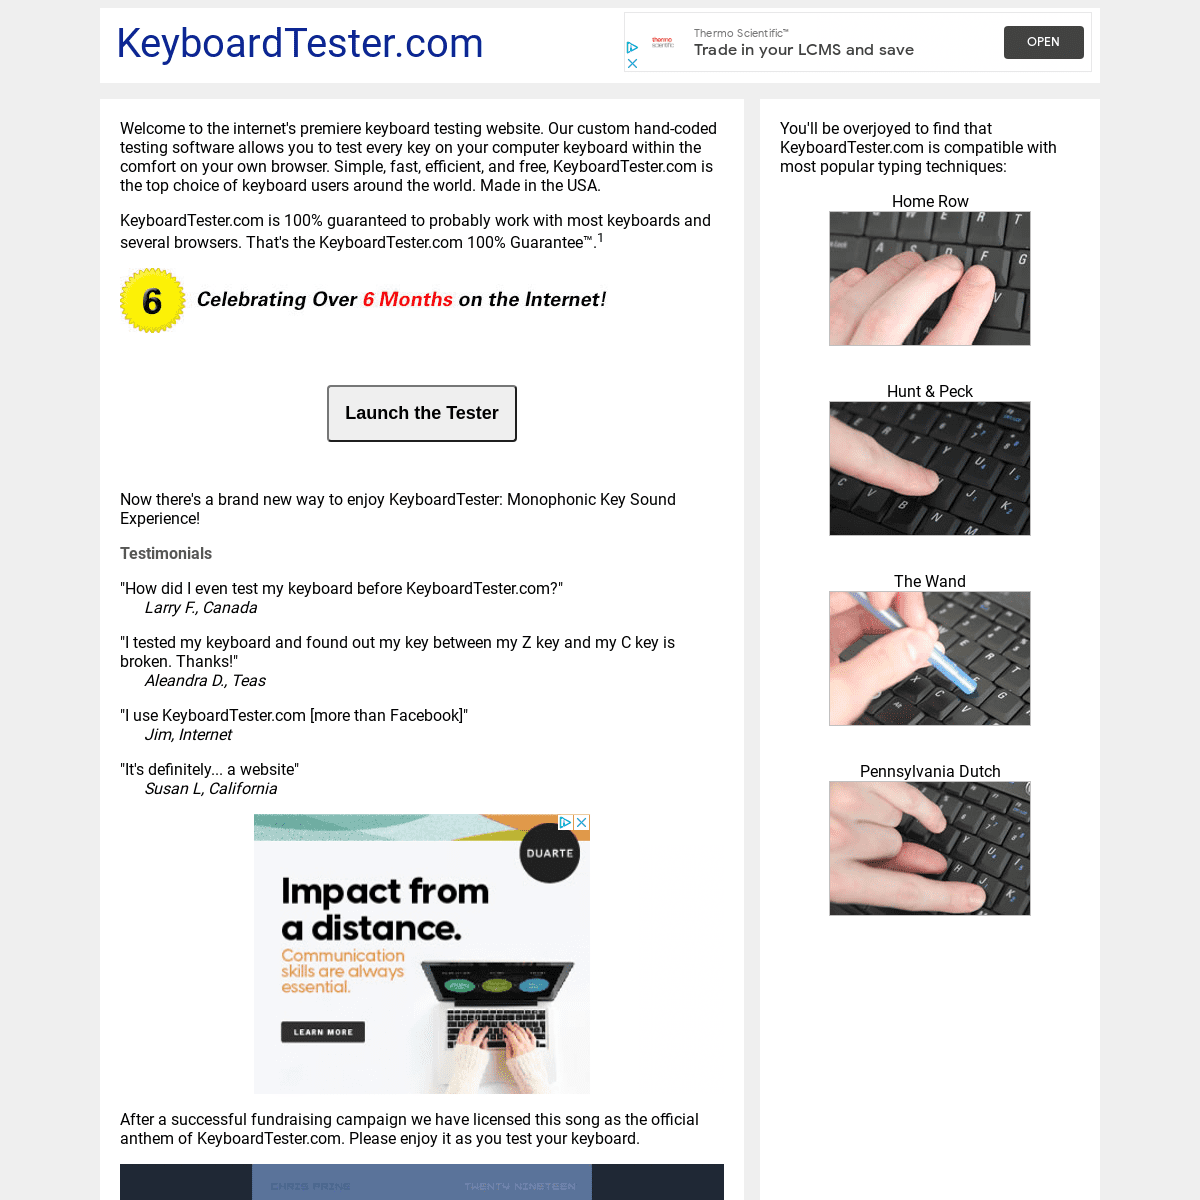 A complete backup of keyboardtester.com